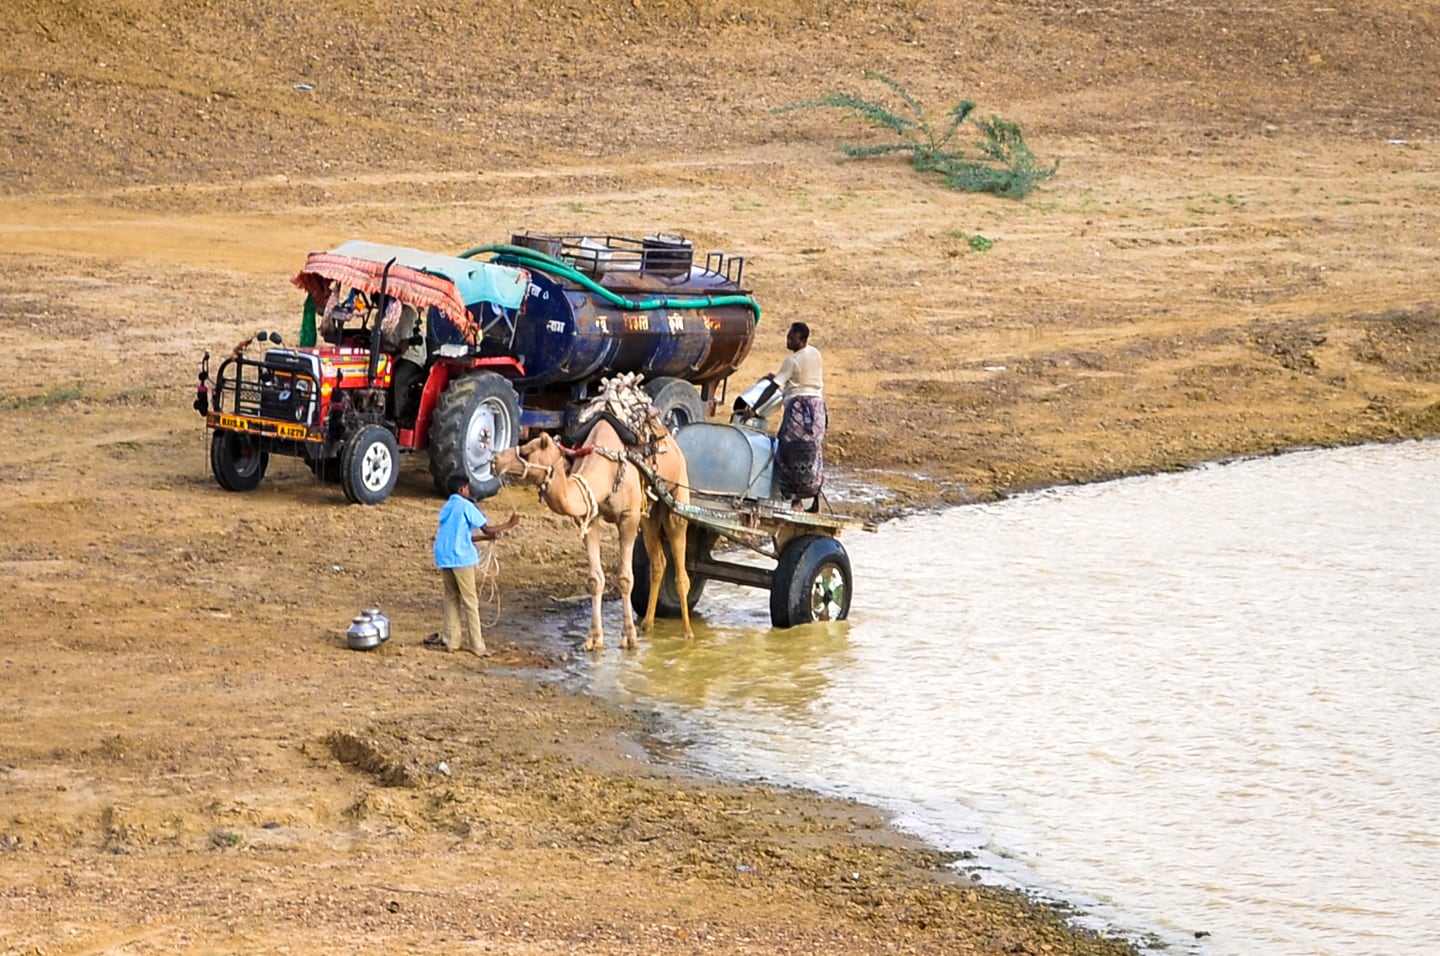 people near Jaisalmer getting water from a reservoir